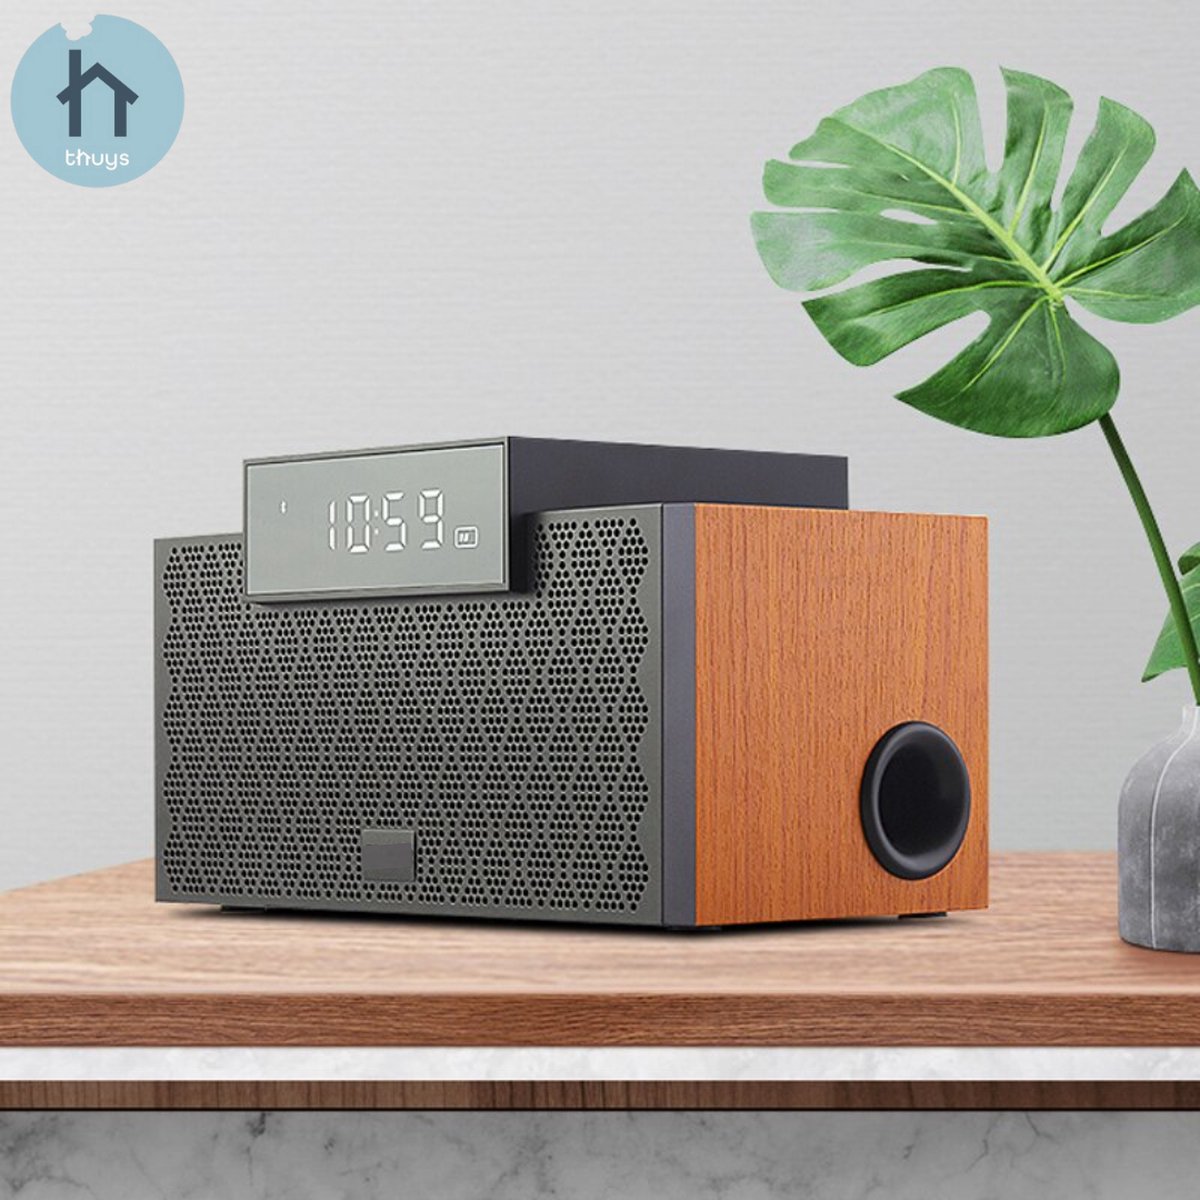 Thuys Klassieke Luxe Bluetooth Speaker - Draadloze Speaker - Digitale Wekker - Klok - Speaker Wekker - Geen Wekker Radio - Classy Hout Design